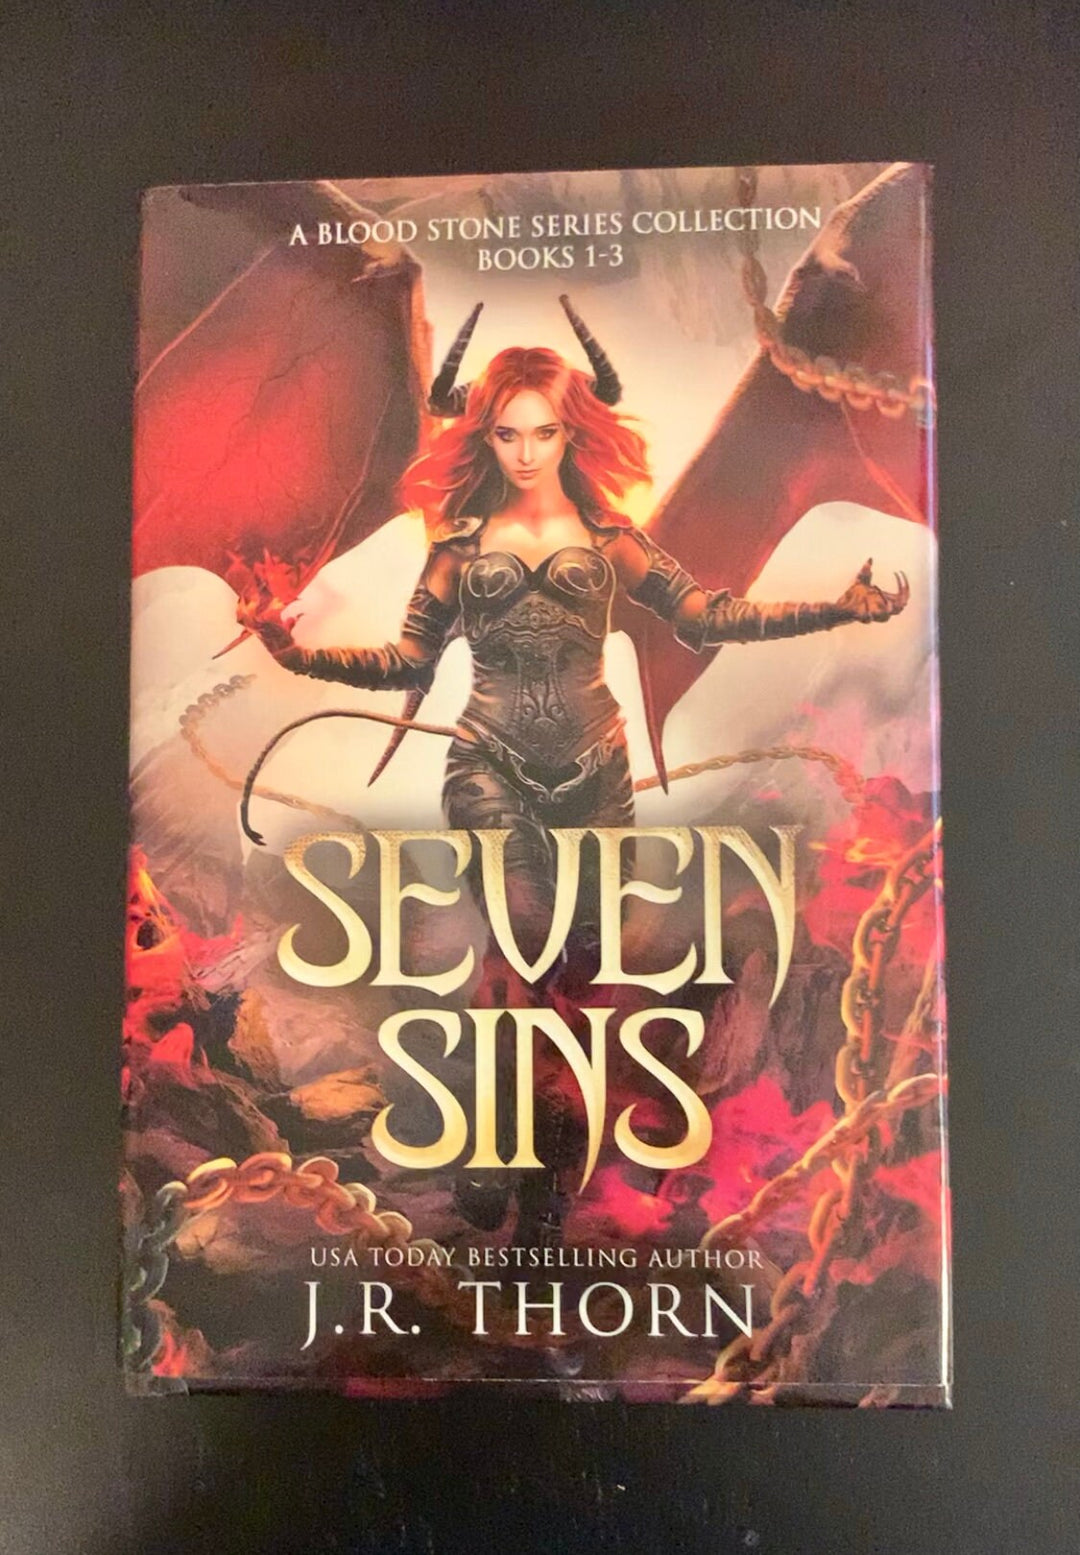 SPECIAL EDITION: Seven Sins Signed Hardback Edition - J.R. Thorn